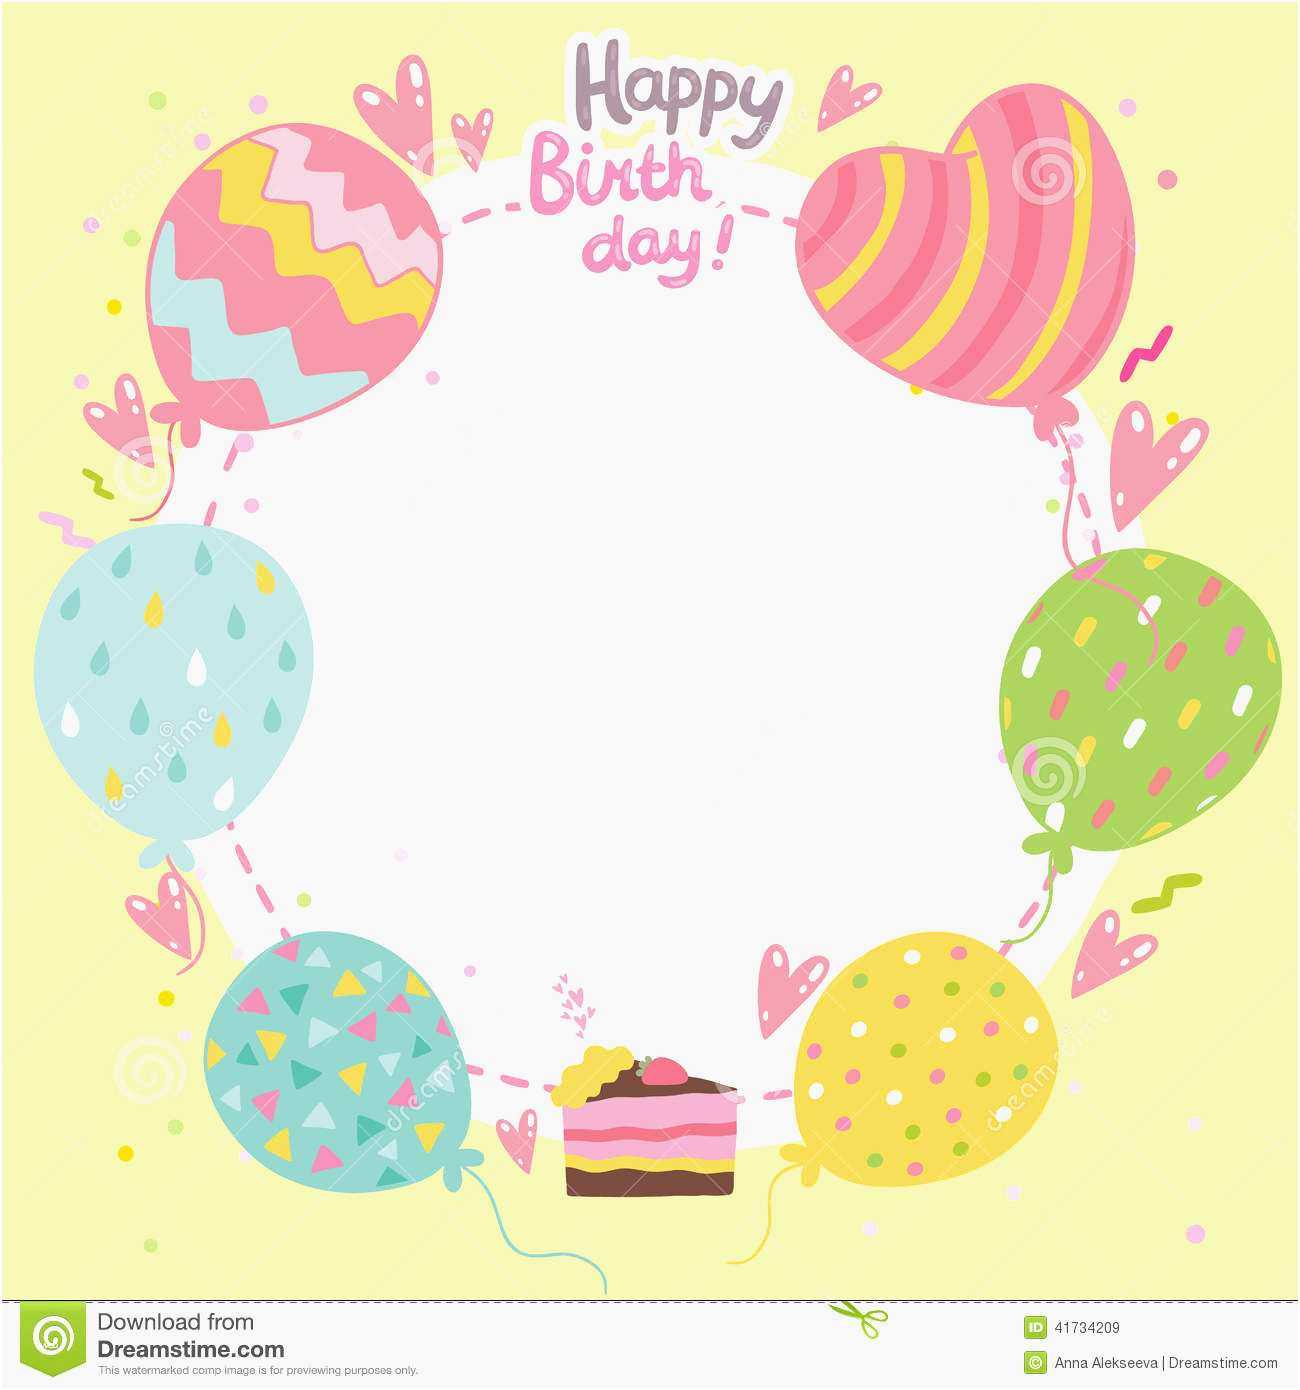 Birthday Card Template Free Greeting Word Blank Quarter Fold Regarding Free Blank Greeting Card Templates For Word